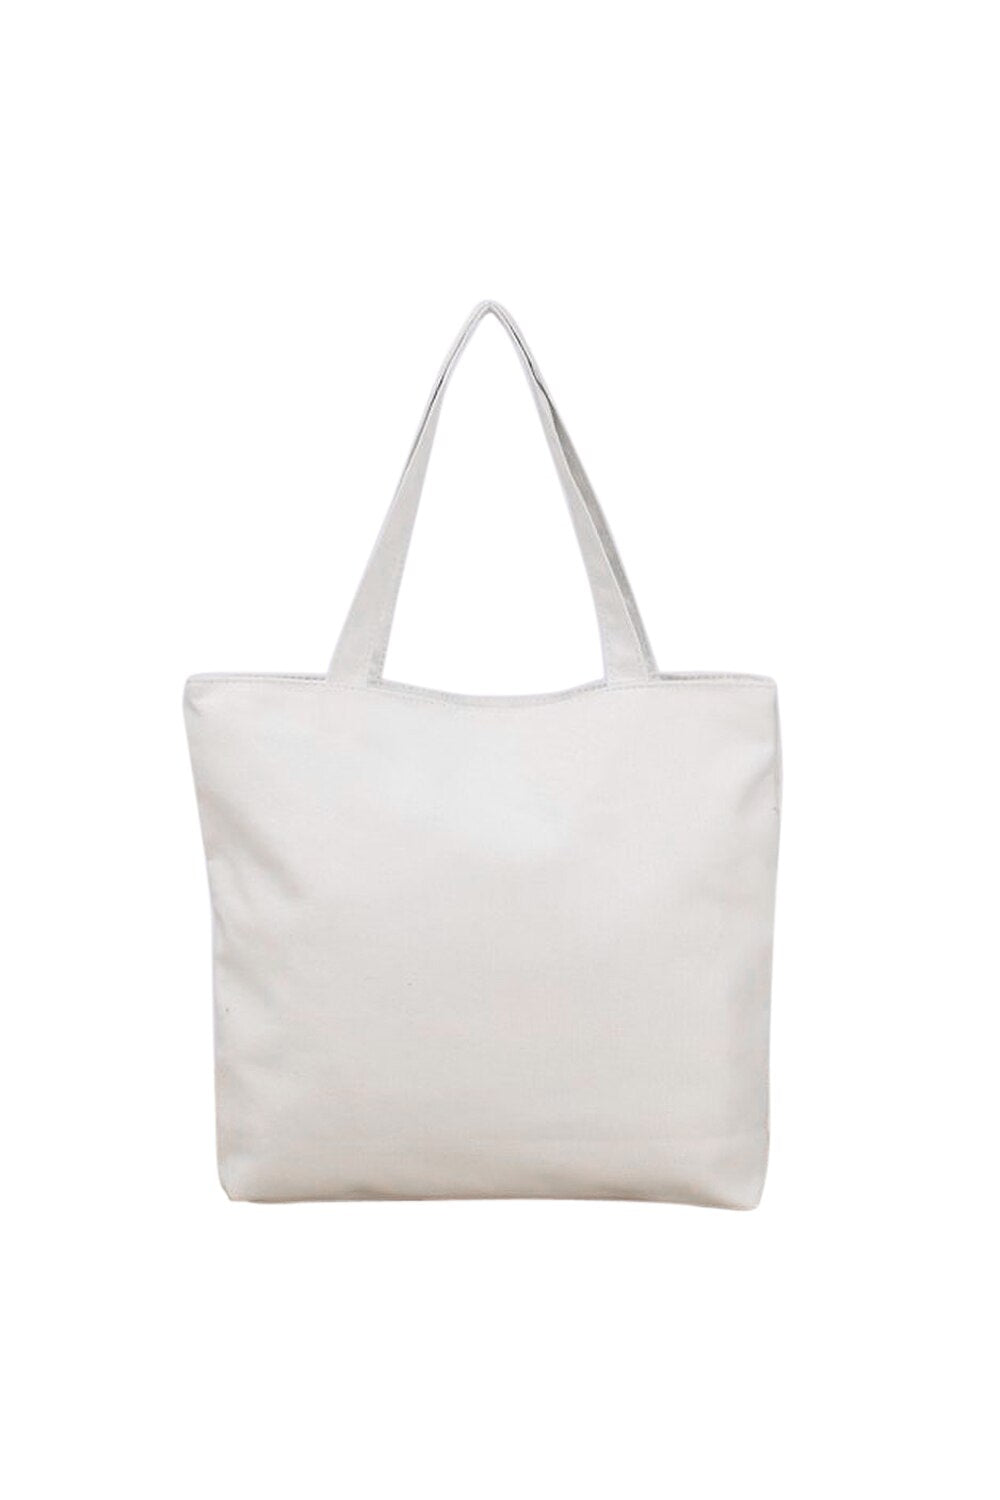 Women Tote Bag Large Handbag Casual Cute Shoulder Bag White - ebowsos